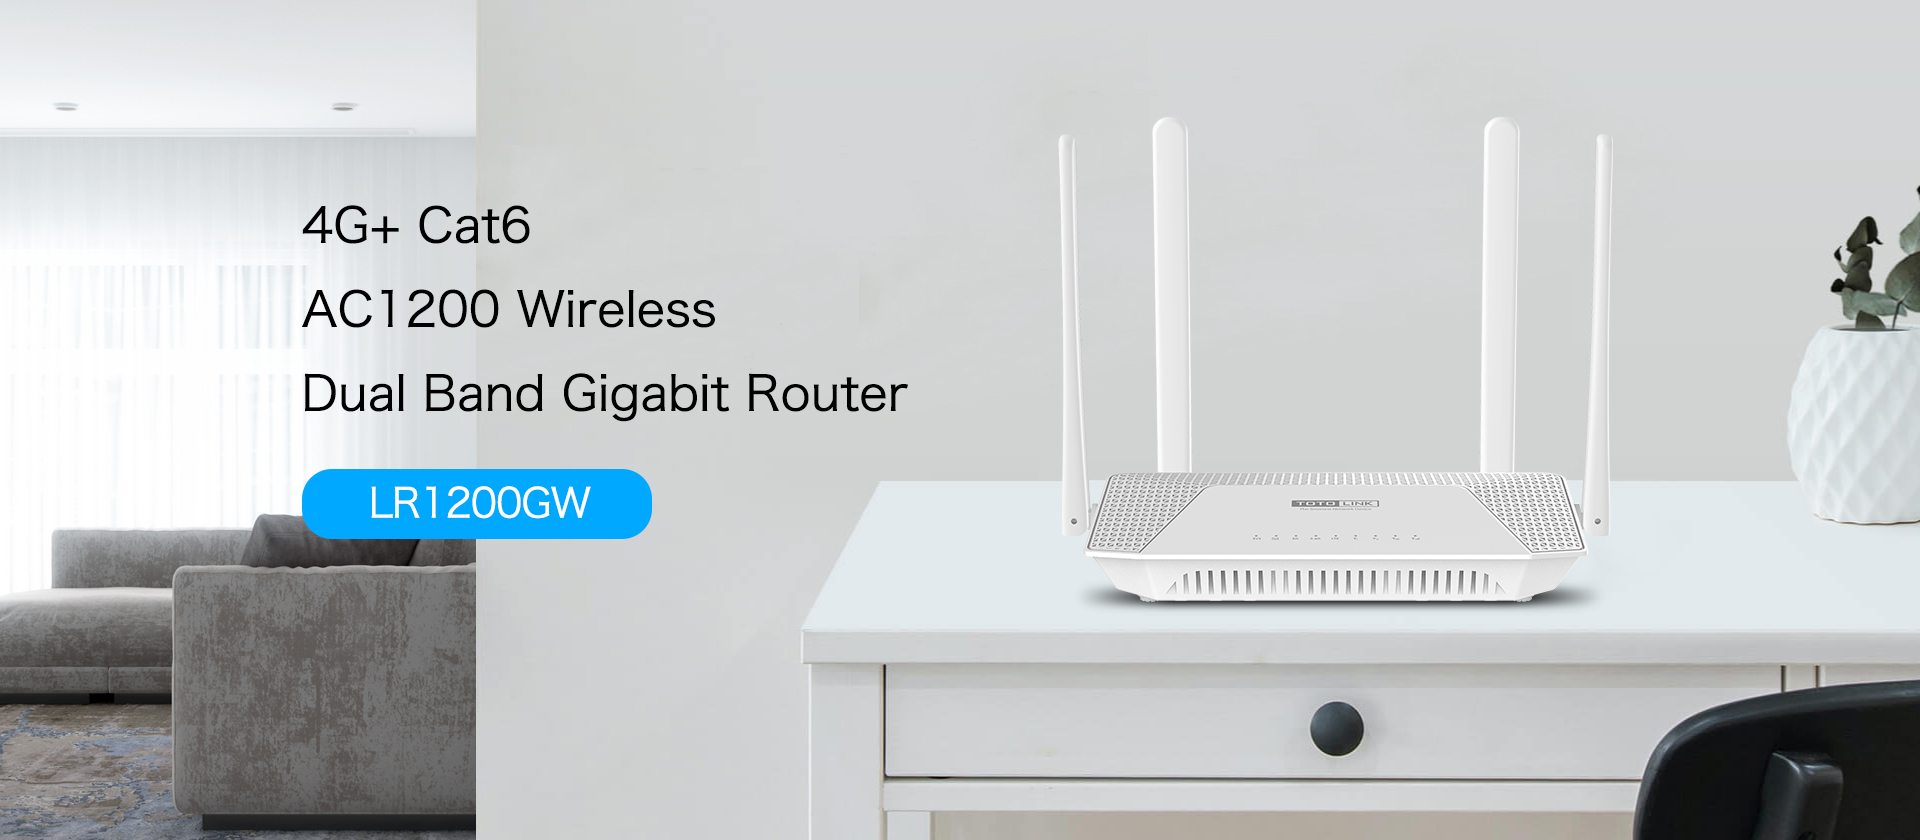 LR1200GW 4G+ Cat6 AC1200 Wireless Dual Band Gigabit Router Dubai